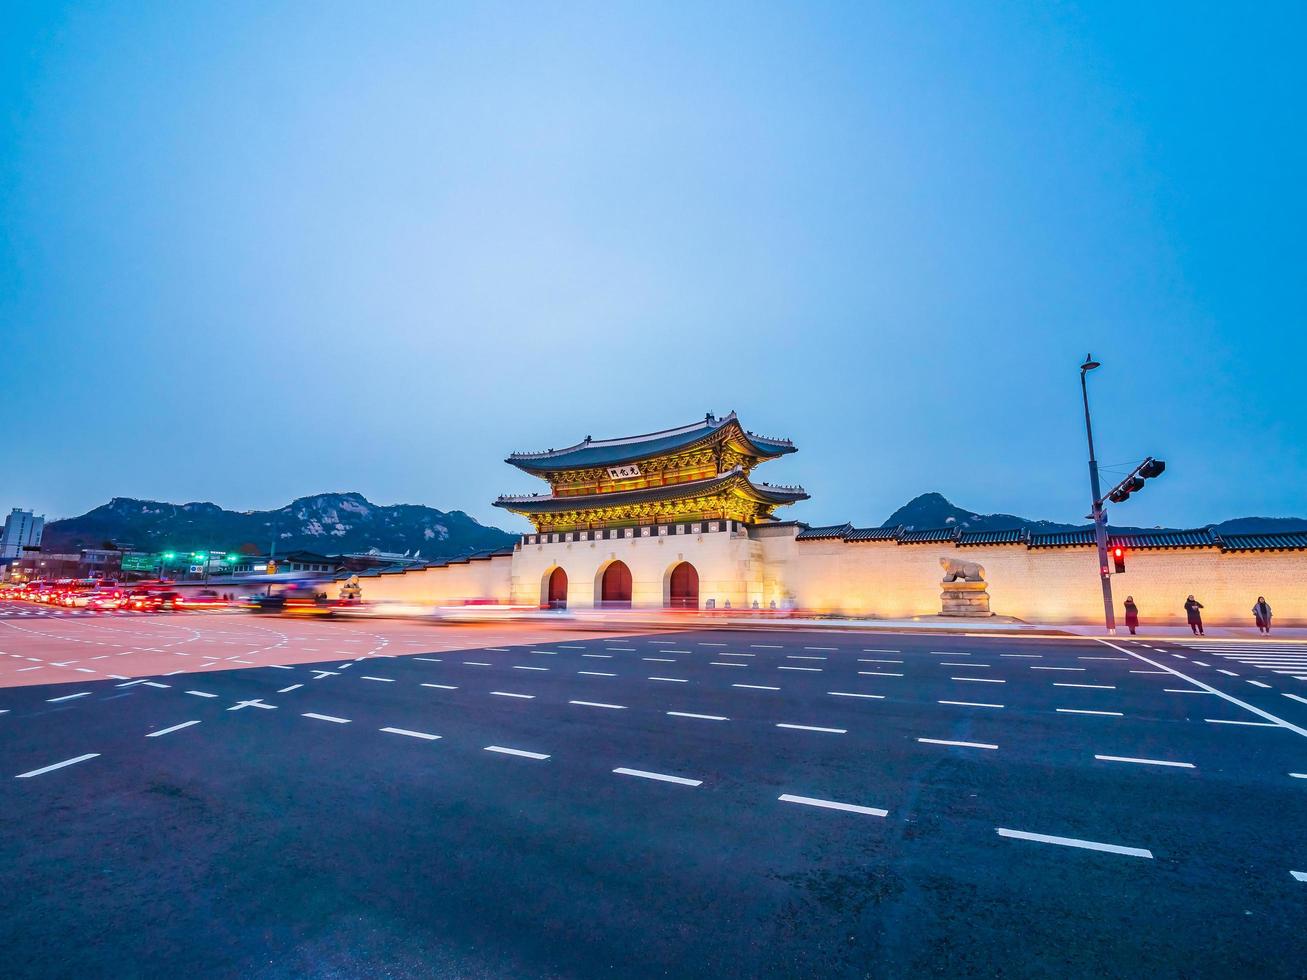 Marco do palácio gyeongbokgung da cidade de Seul, na Coreia do Sul foto